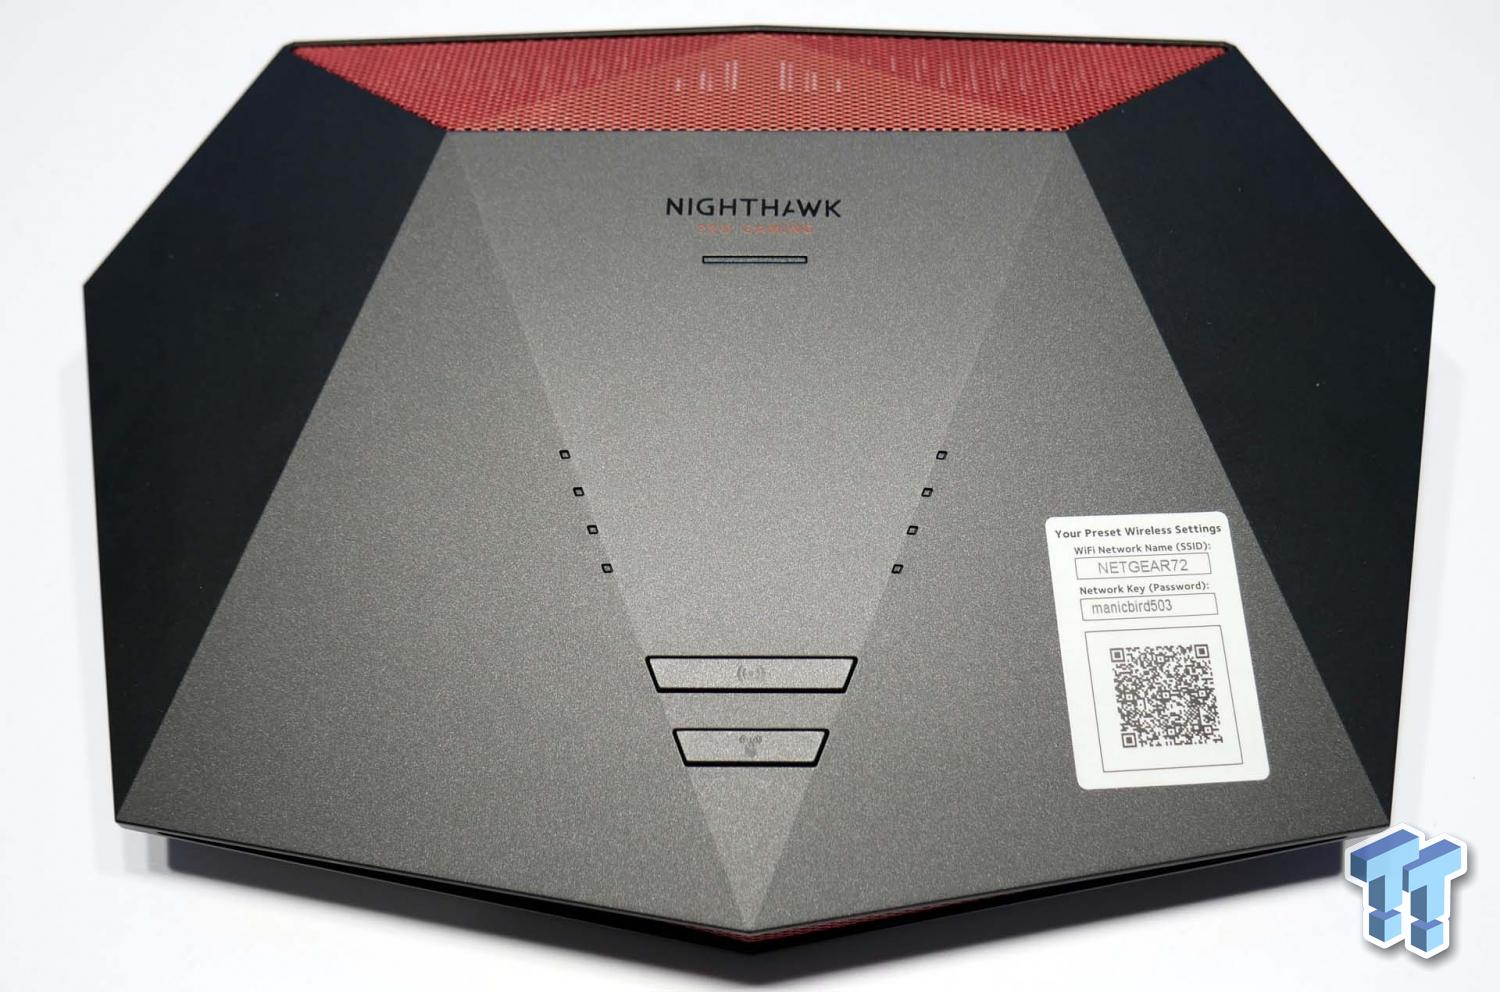 Netgear Nighthawk XR1000 Wi-Fi 6 Router Review